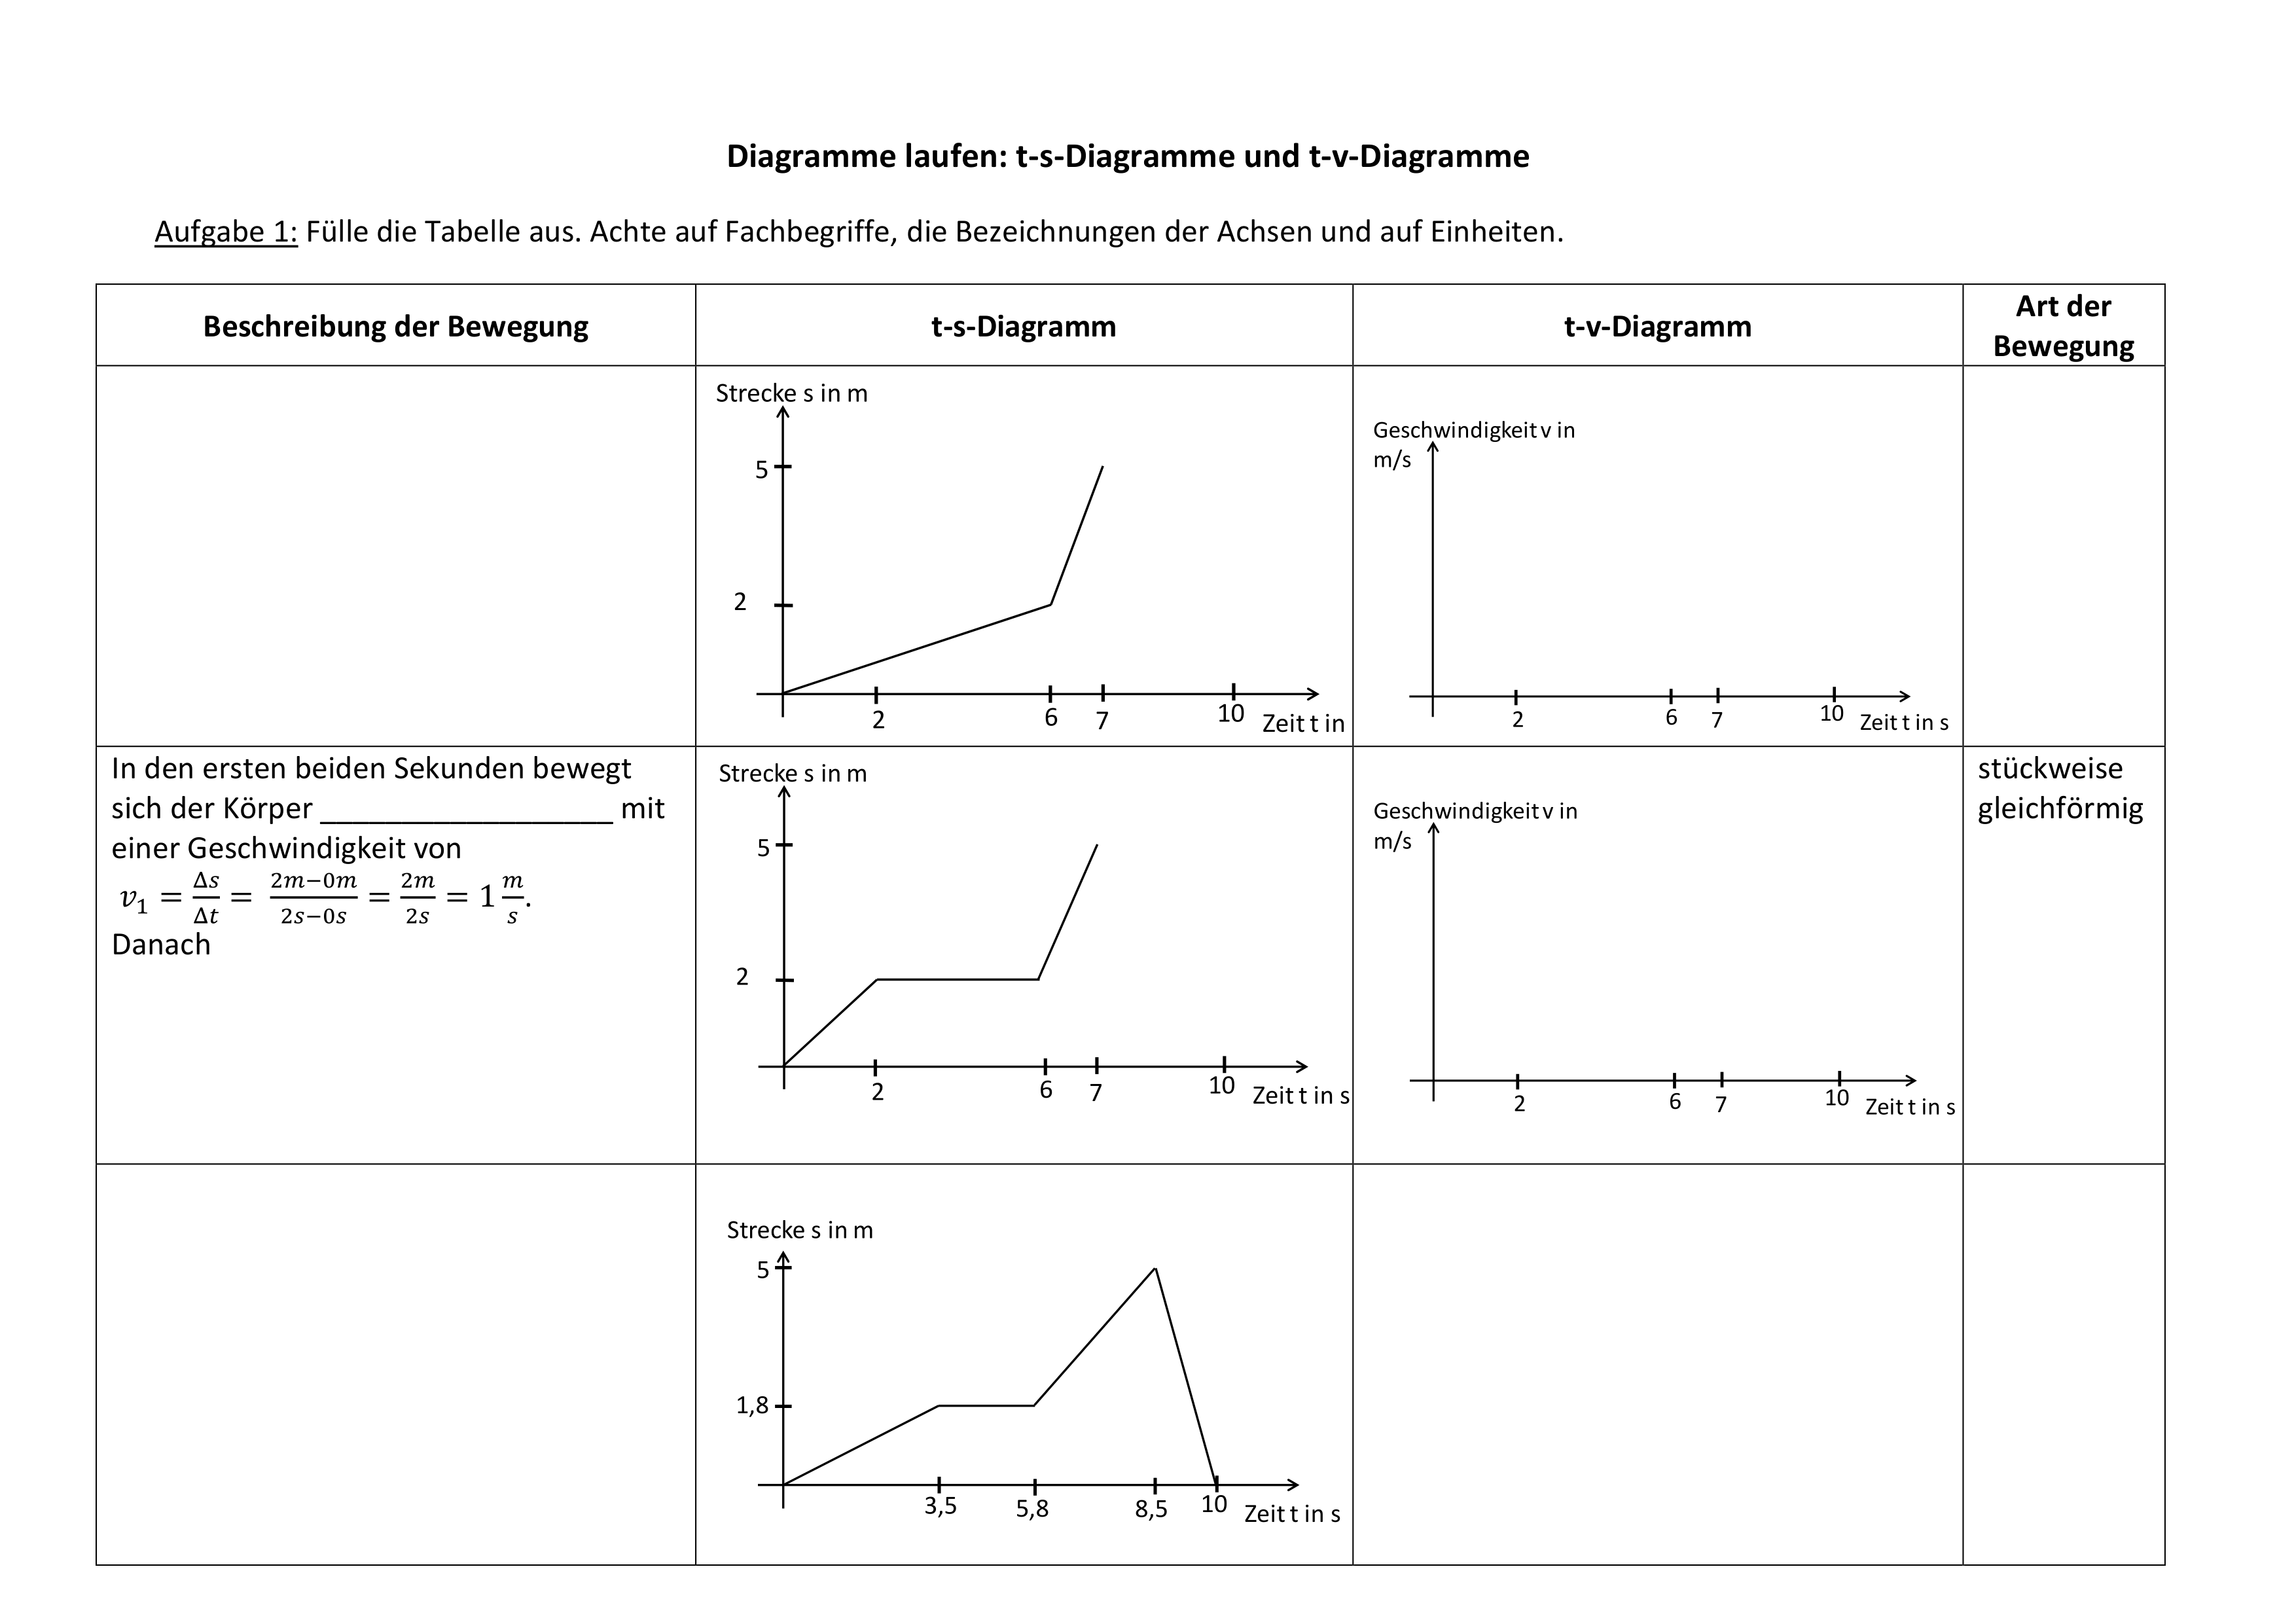 Diagramme Laufen T S Und T V Diagramm Unterrichtsmaterial Im Fach Physik Diagramm Unterrichtsmaterial Physik